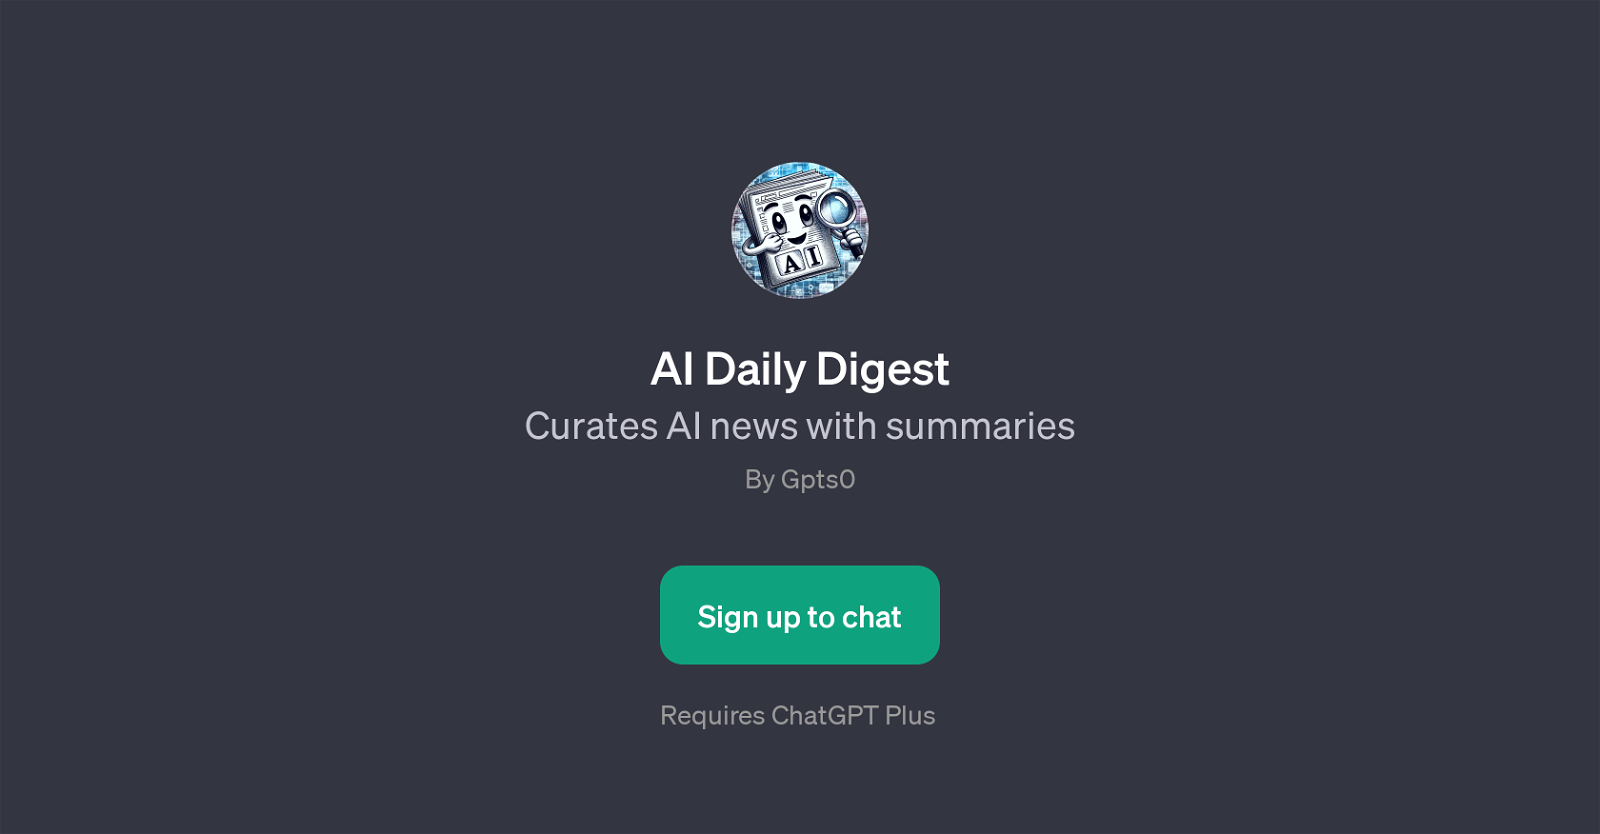 AI Daily Digest website